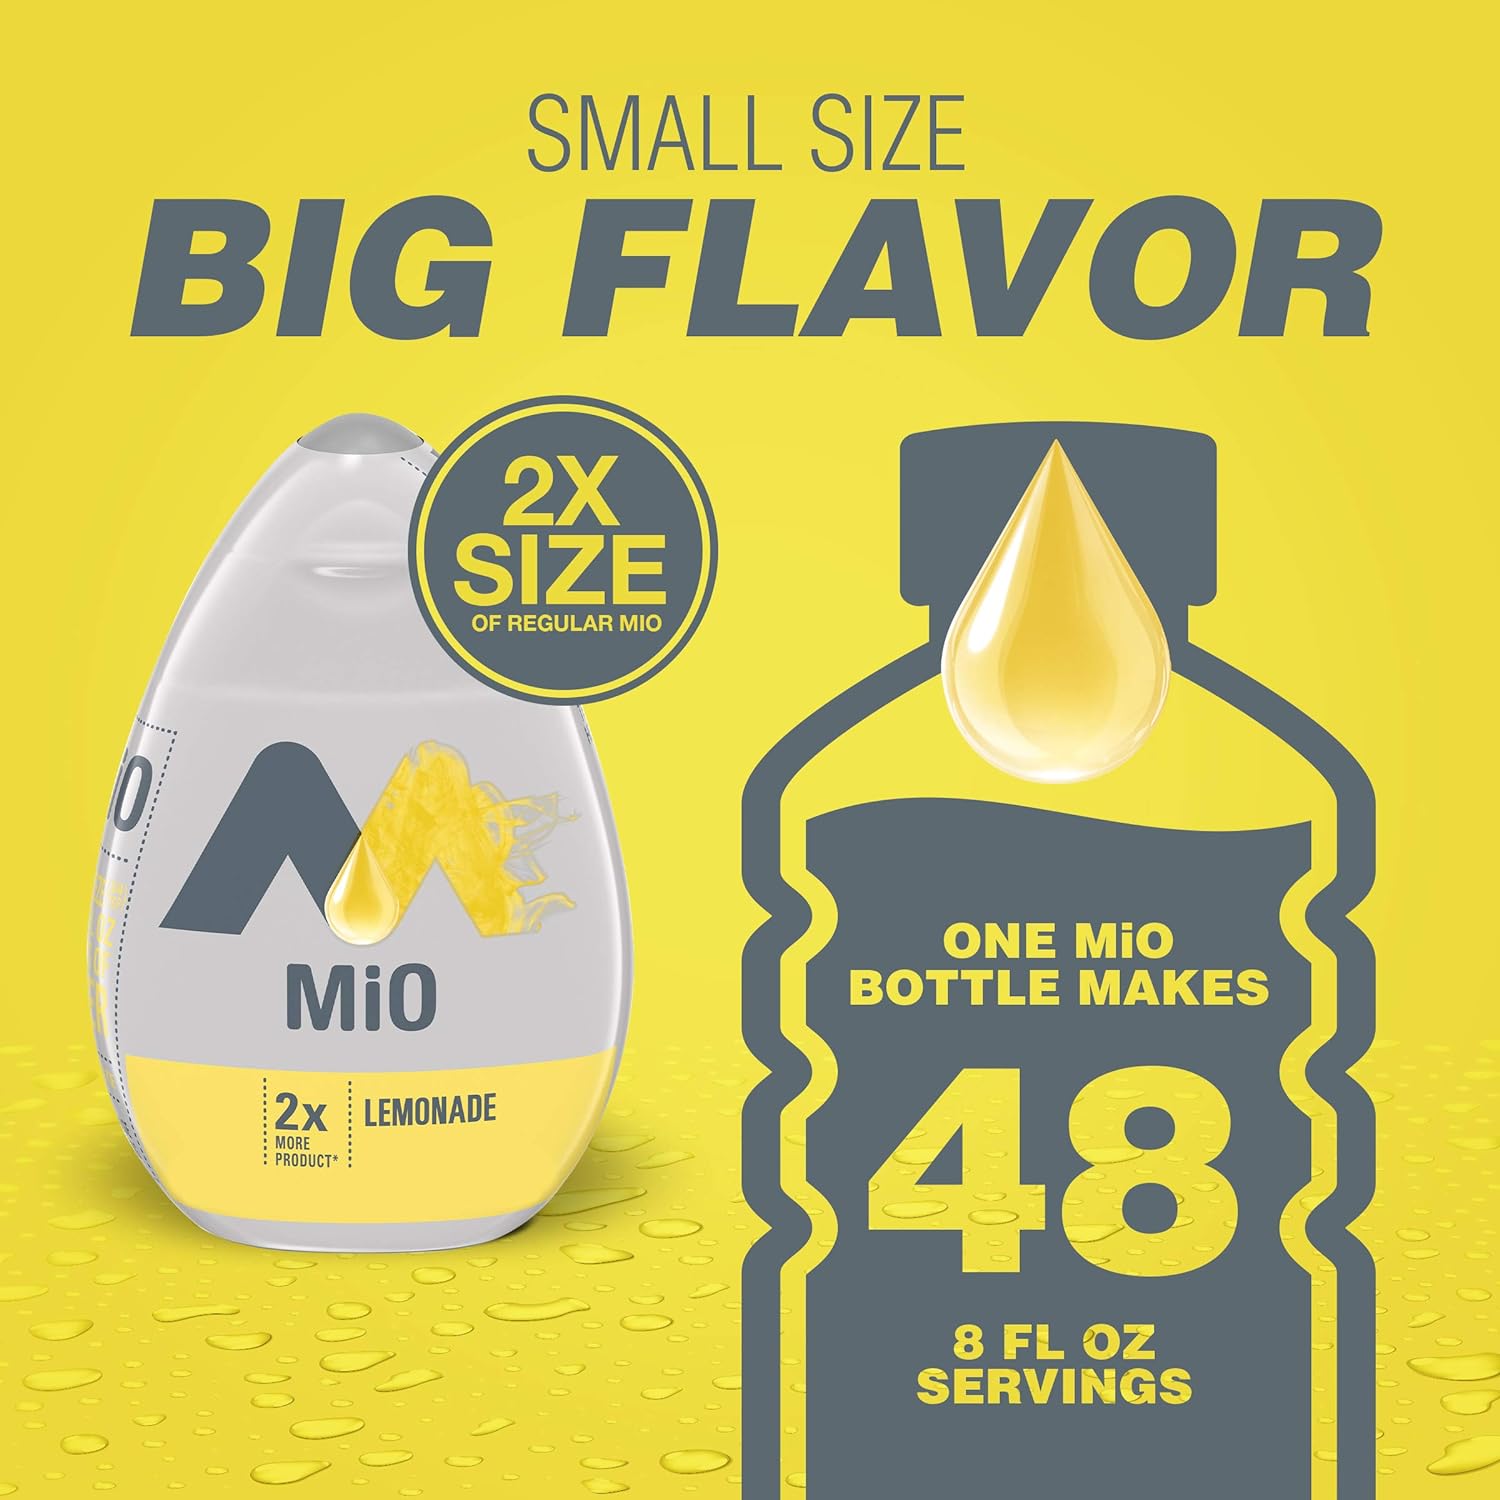 MiO Sugar-Free Lemonade Naturally Flavored Liquid Water Enhancer 1 Count 3.24 fl oz